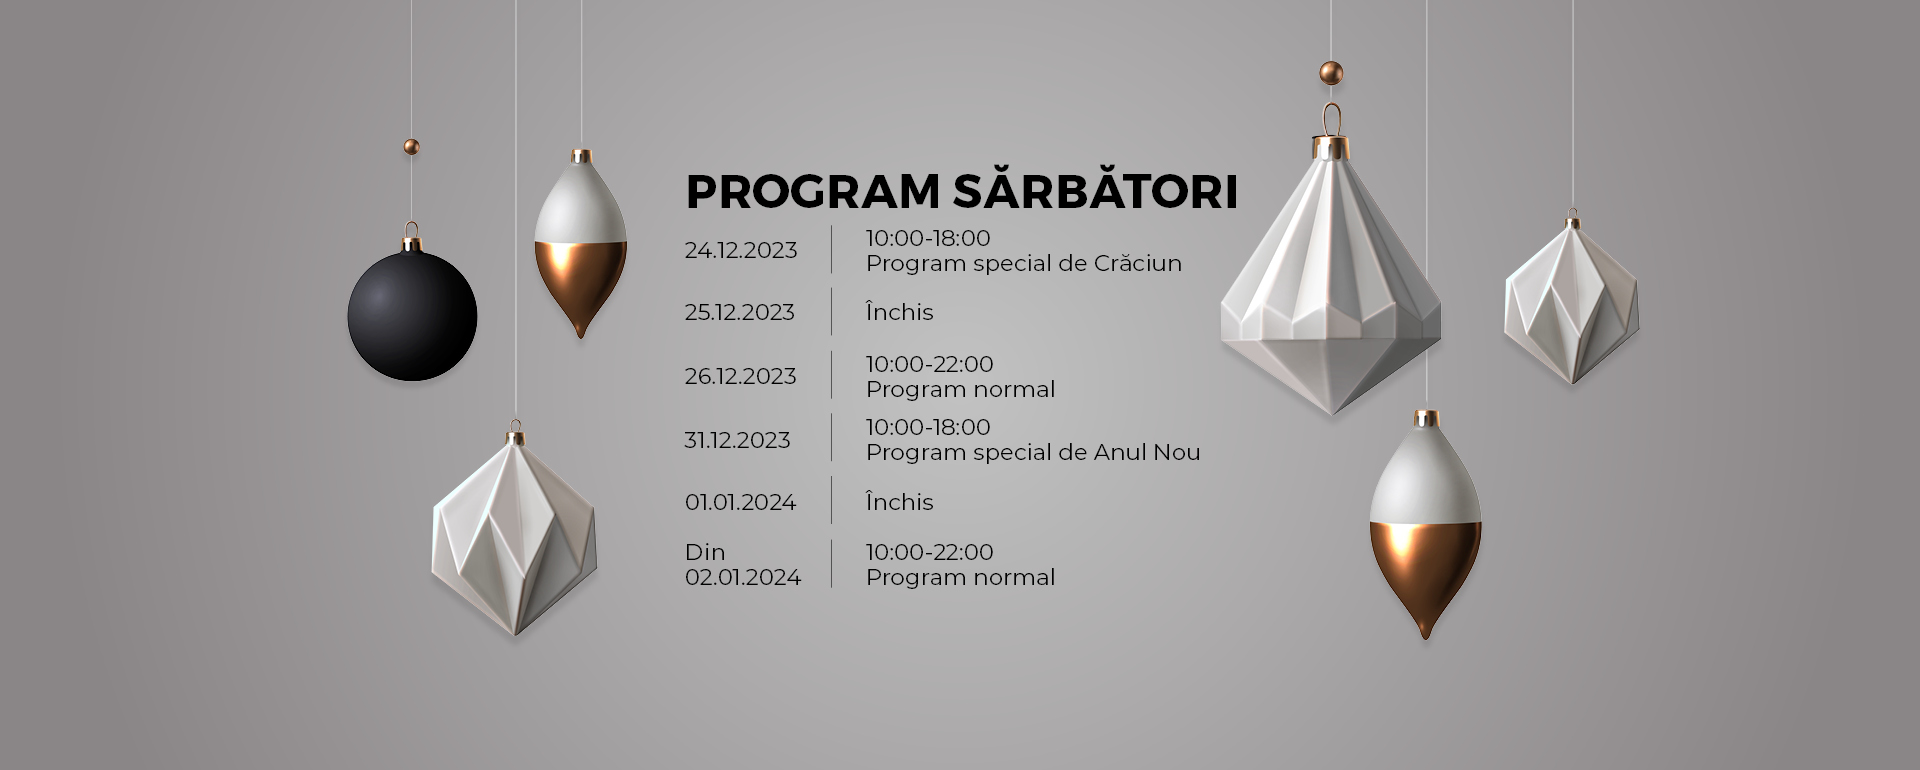 Program Sarbatori_HomeHeroBanner_1920X770px.jpg